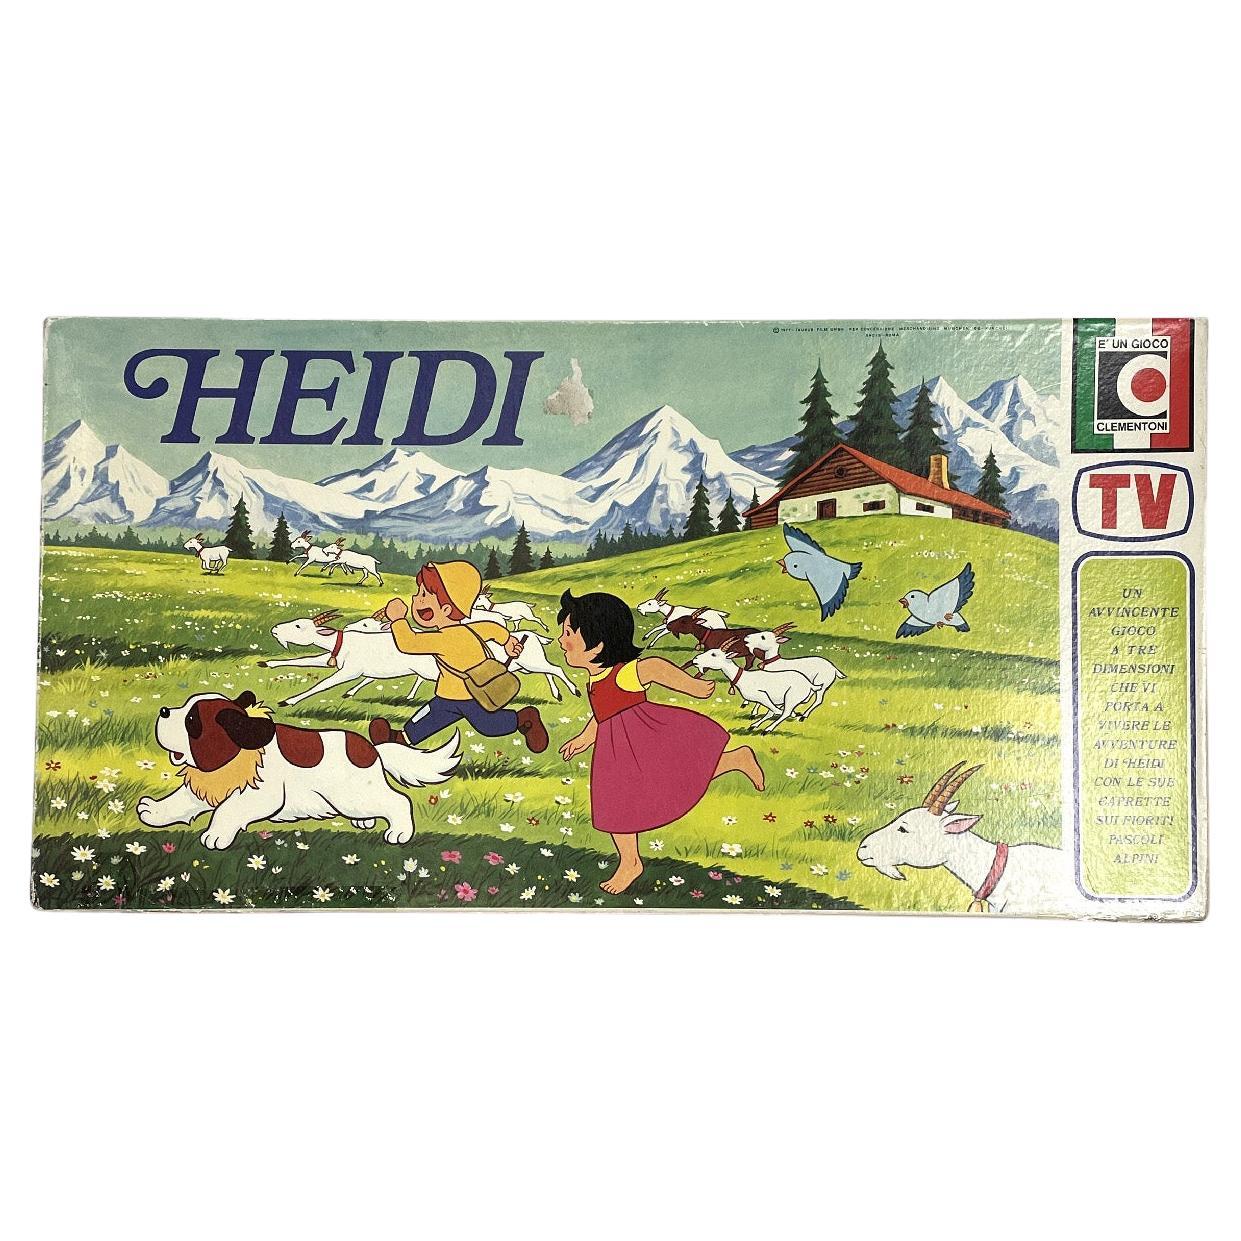 Italian modern Heidi board game by Clementoni, 1980s